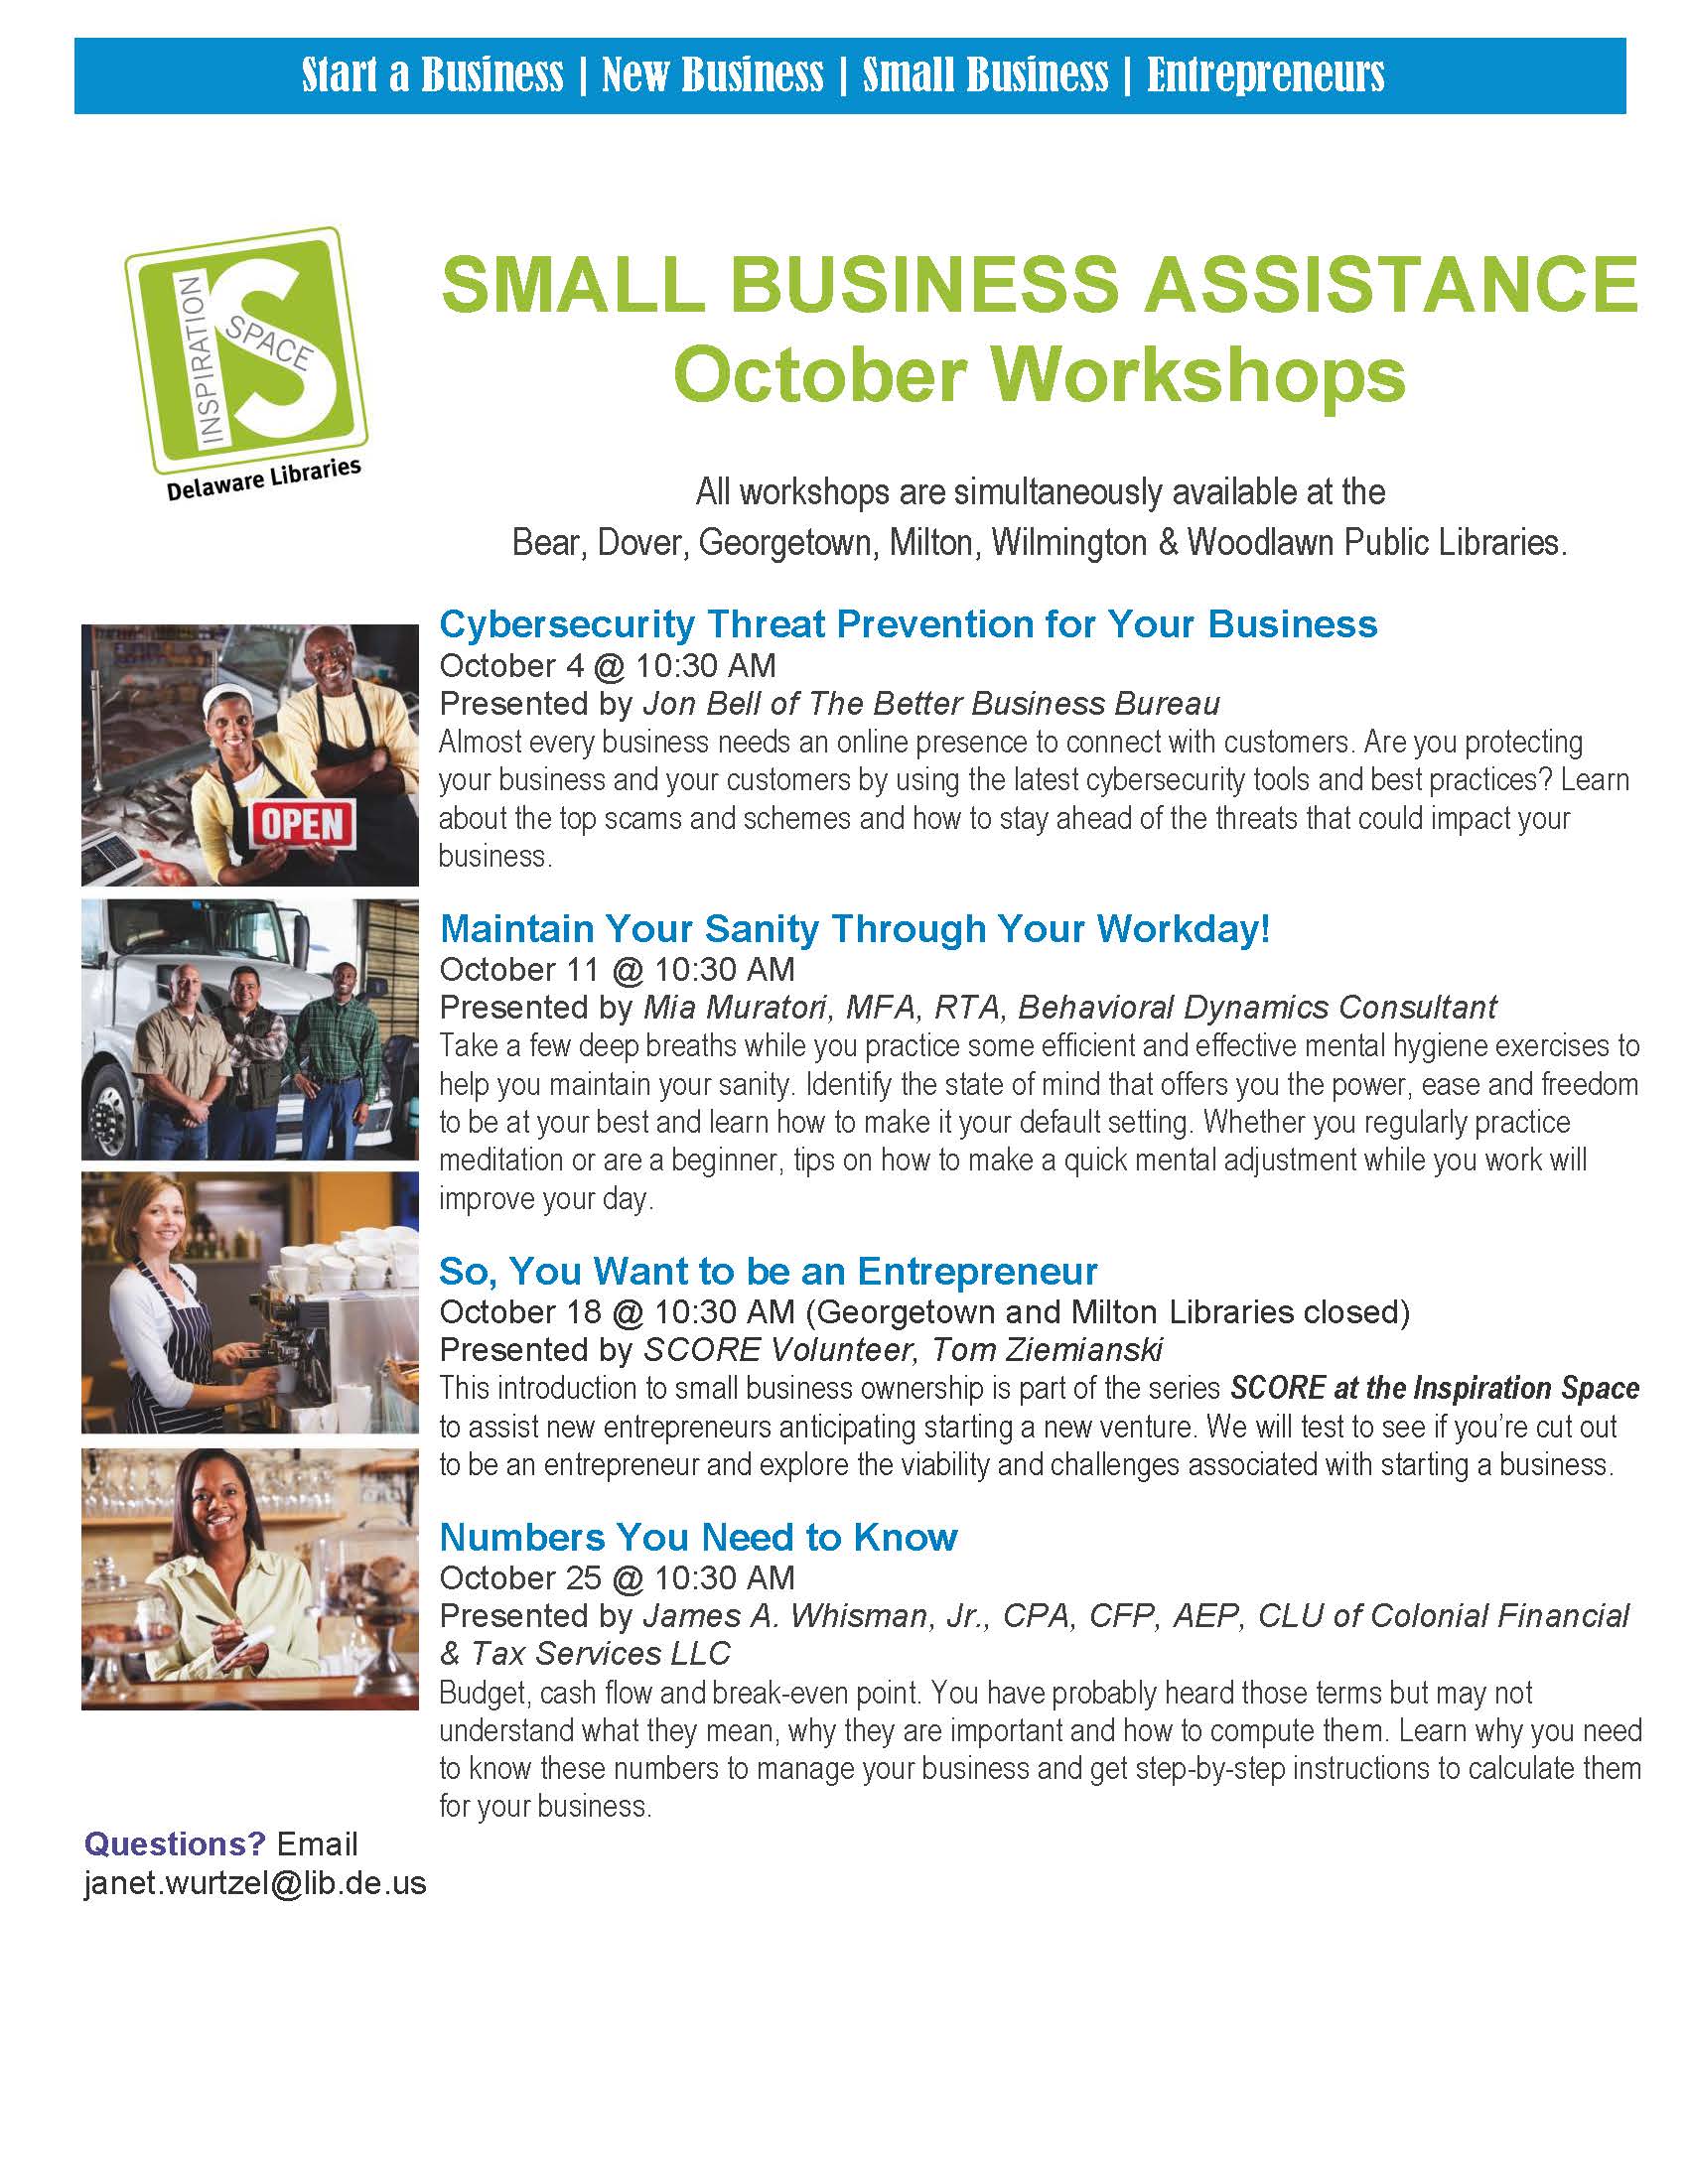 Small Business Assistance October Workshops